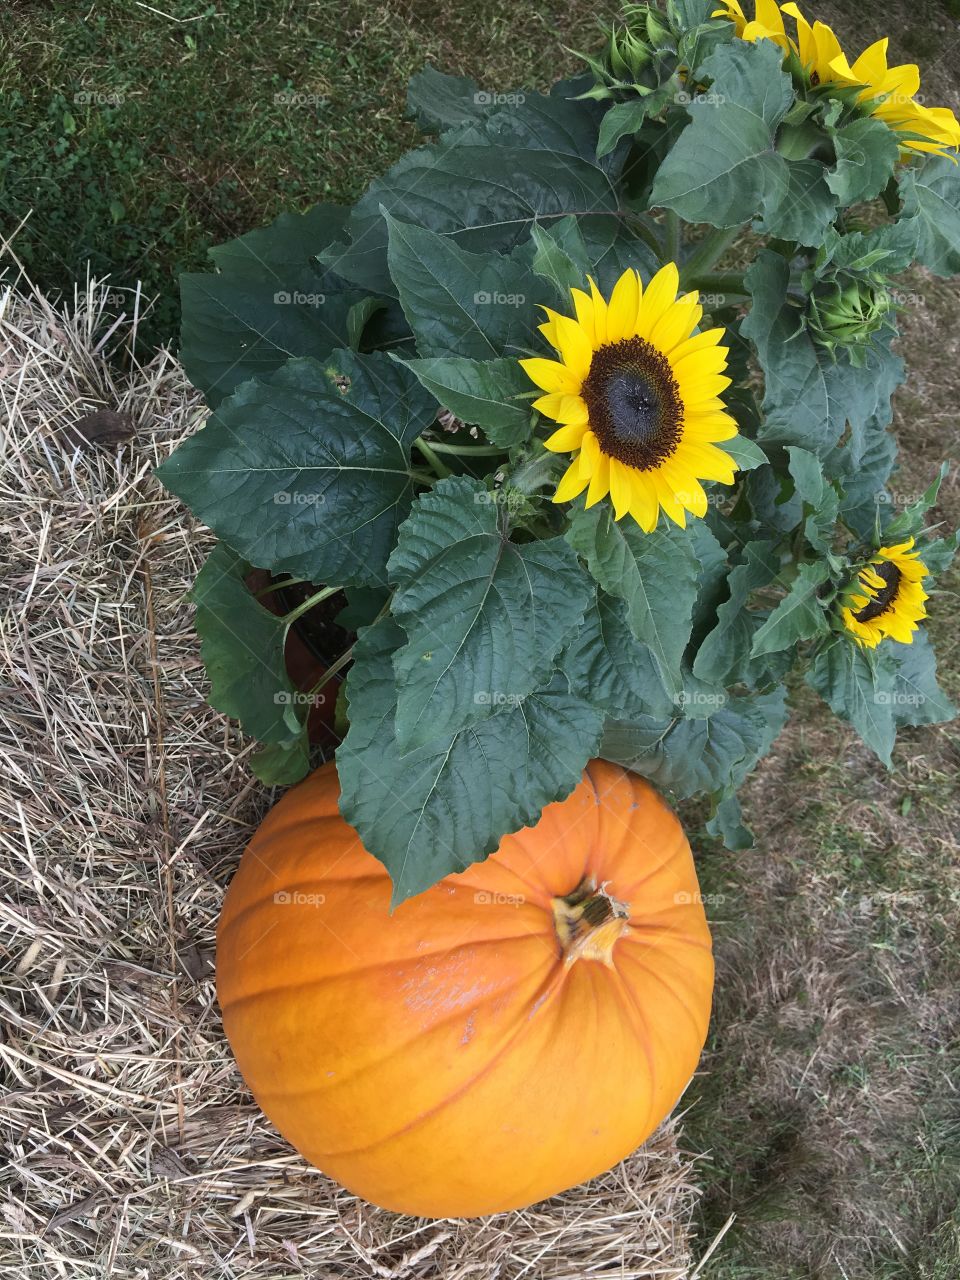 Pumpkin with sunflowers